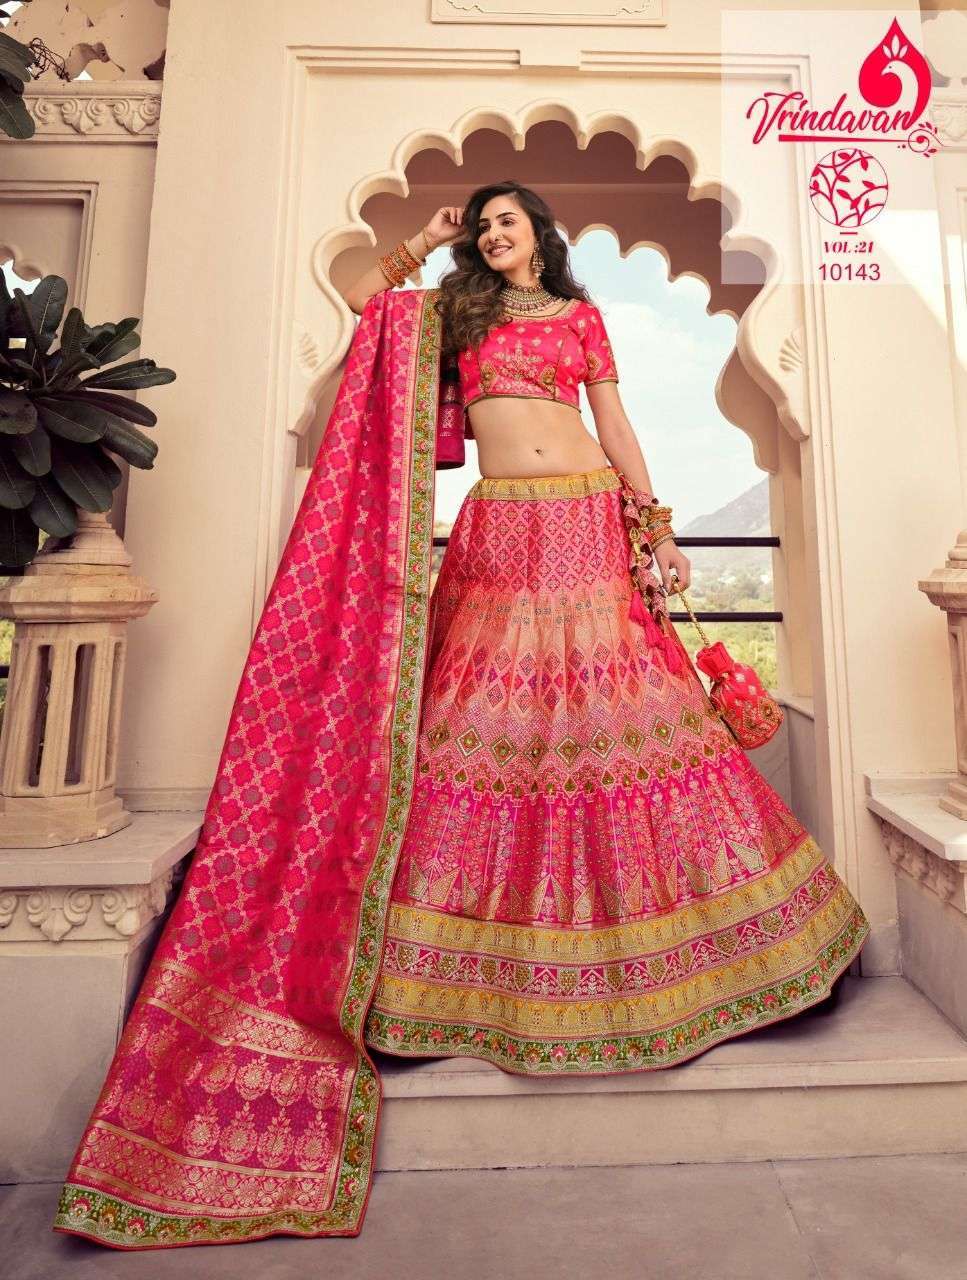 Royal presents Vrindavan vol-21 fancy exclusive designer bridal Lahenga choli collection 